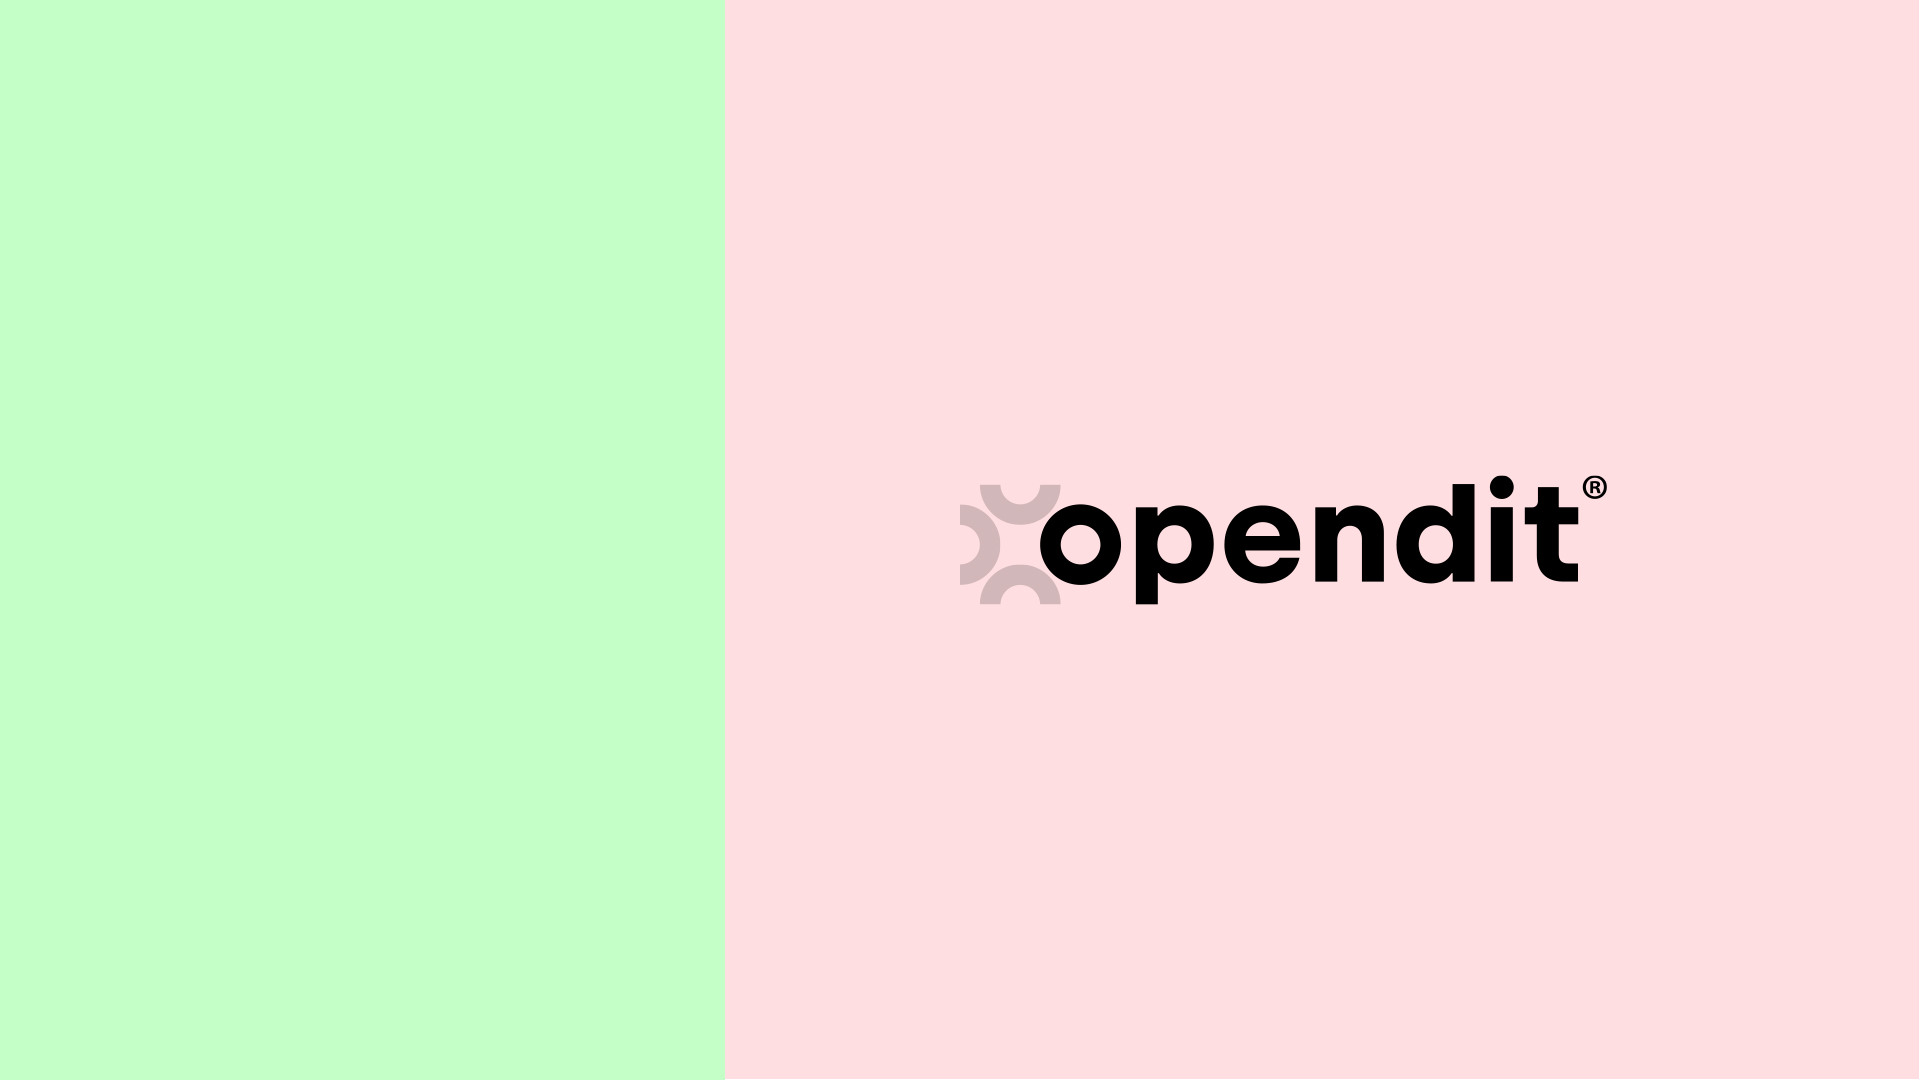 New corporate identity, Opendit